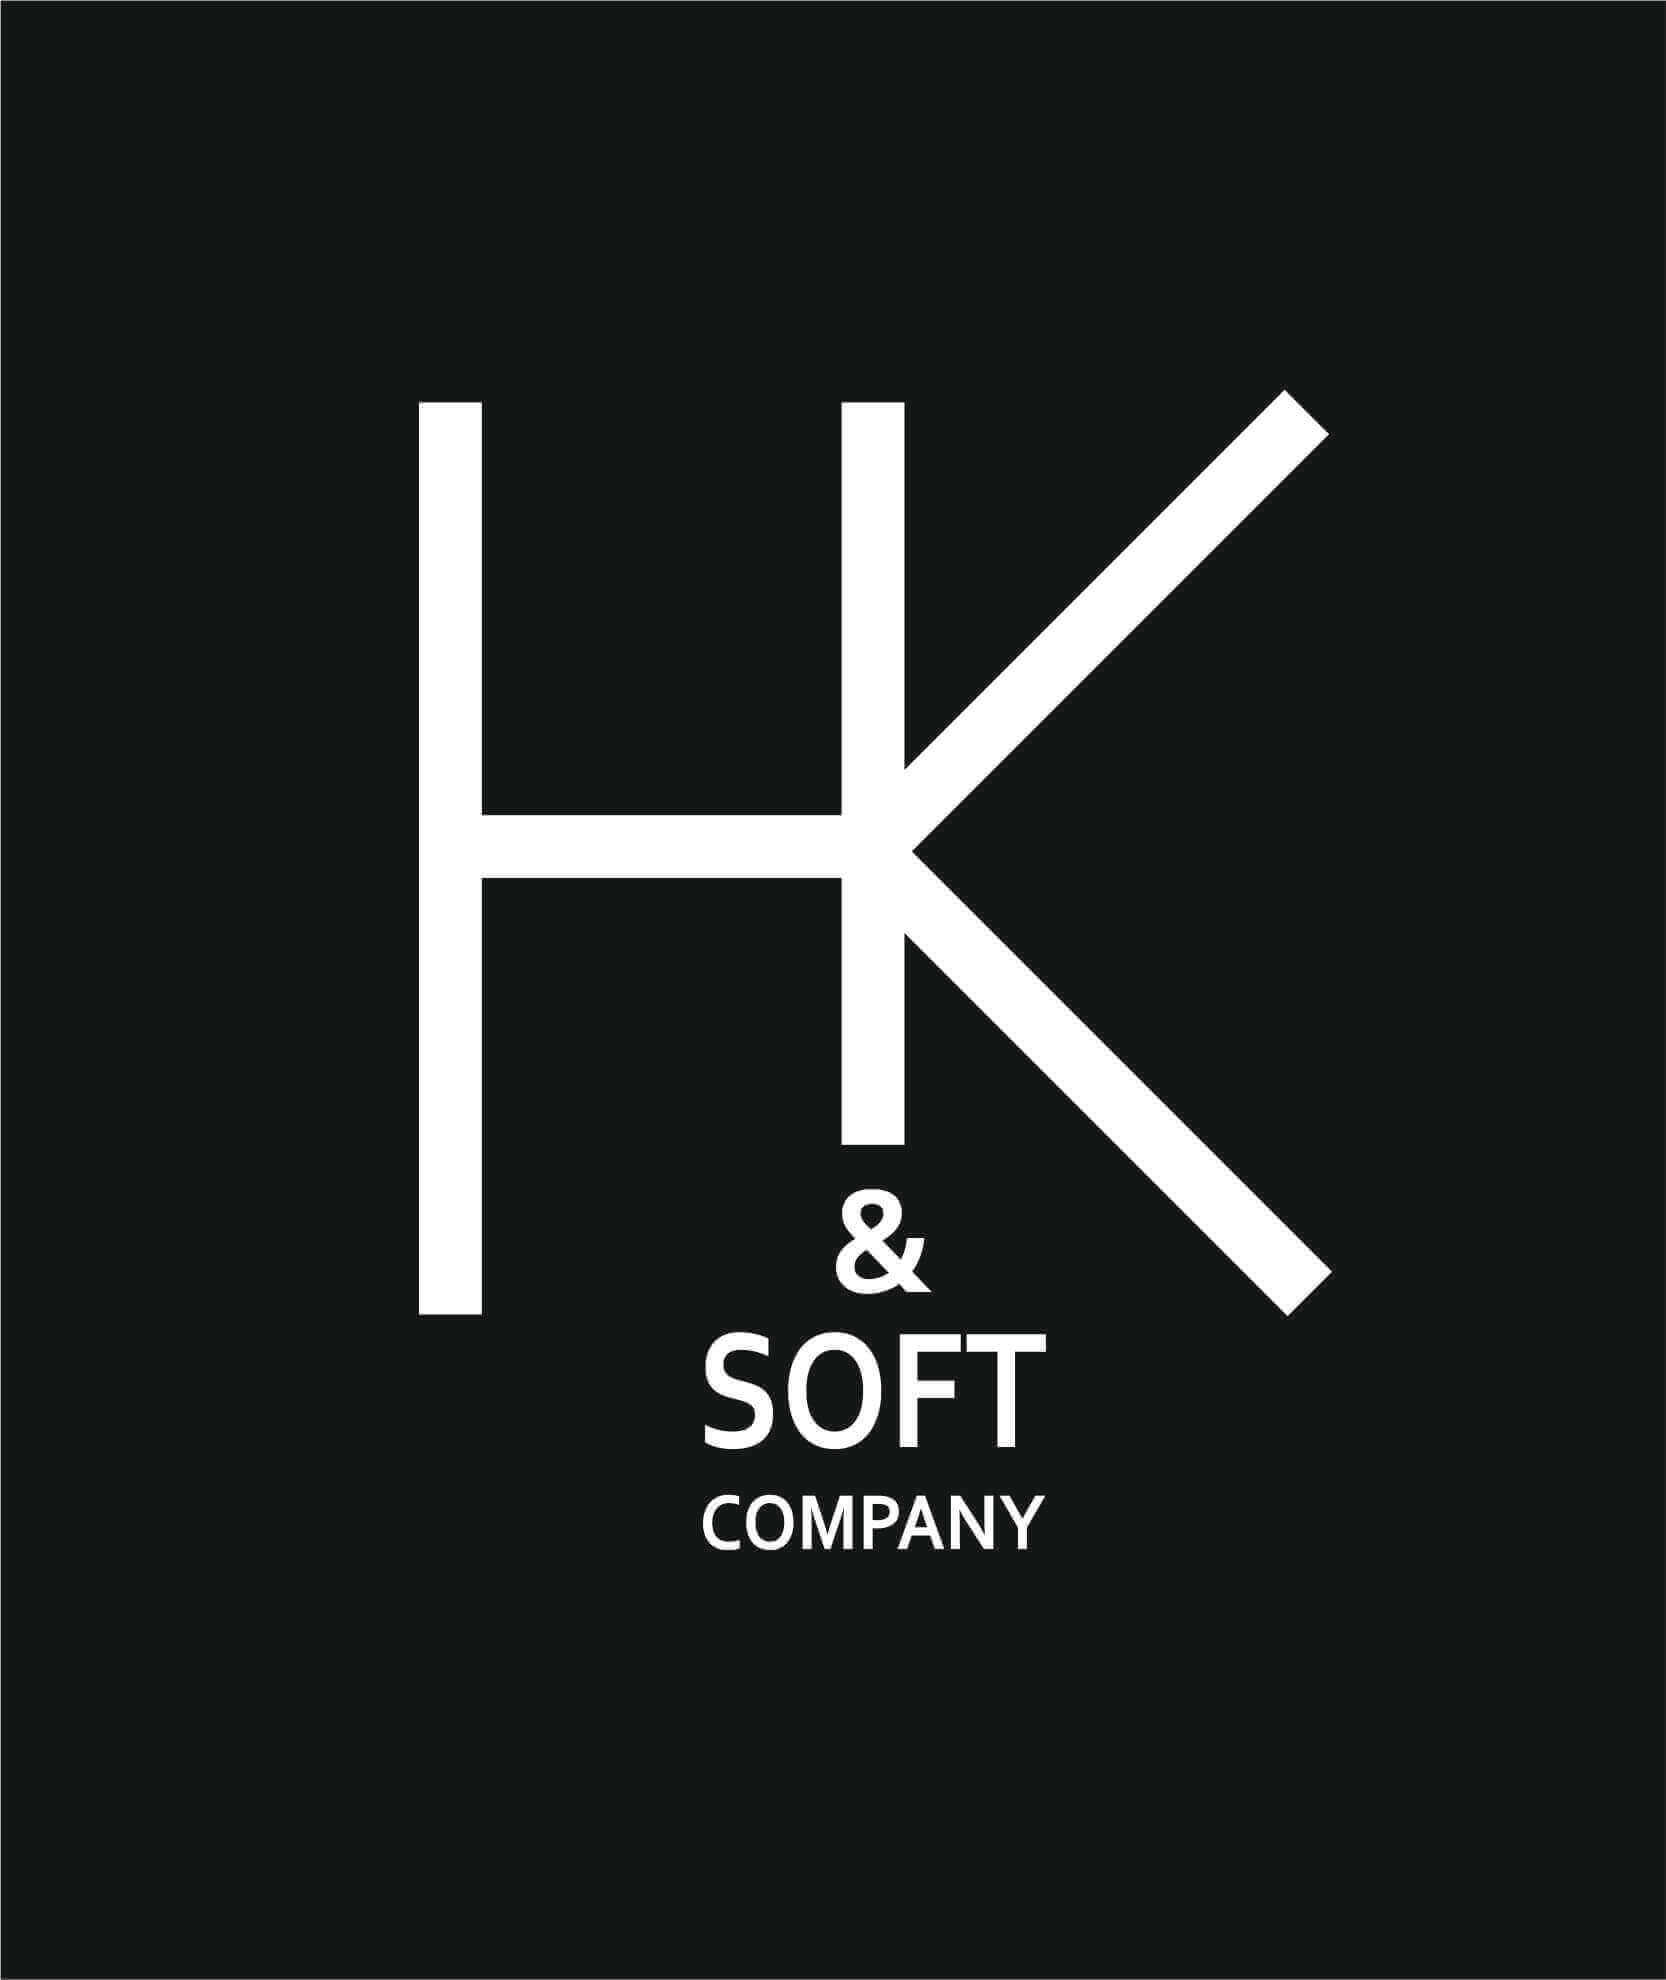 H&K Soft Company